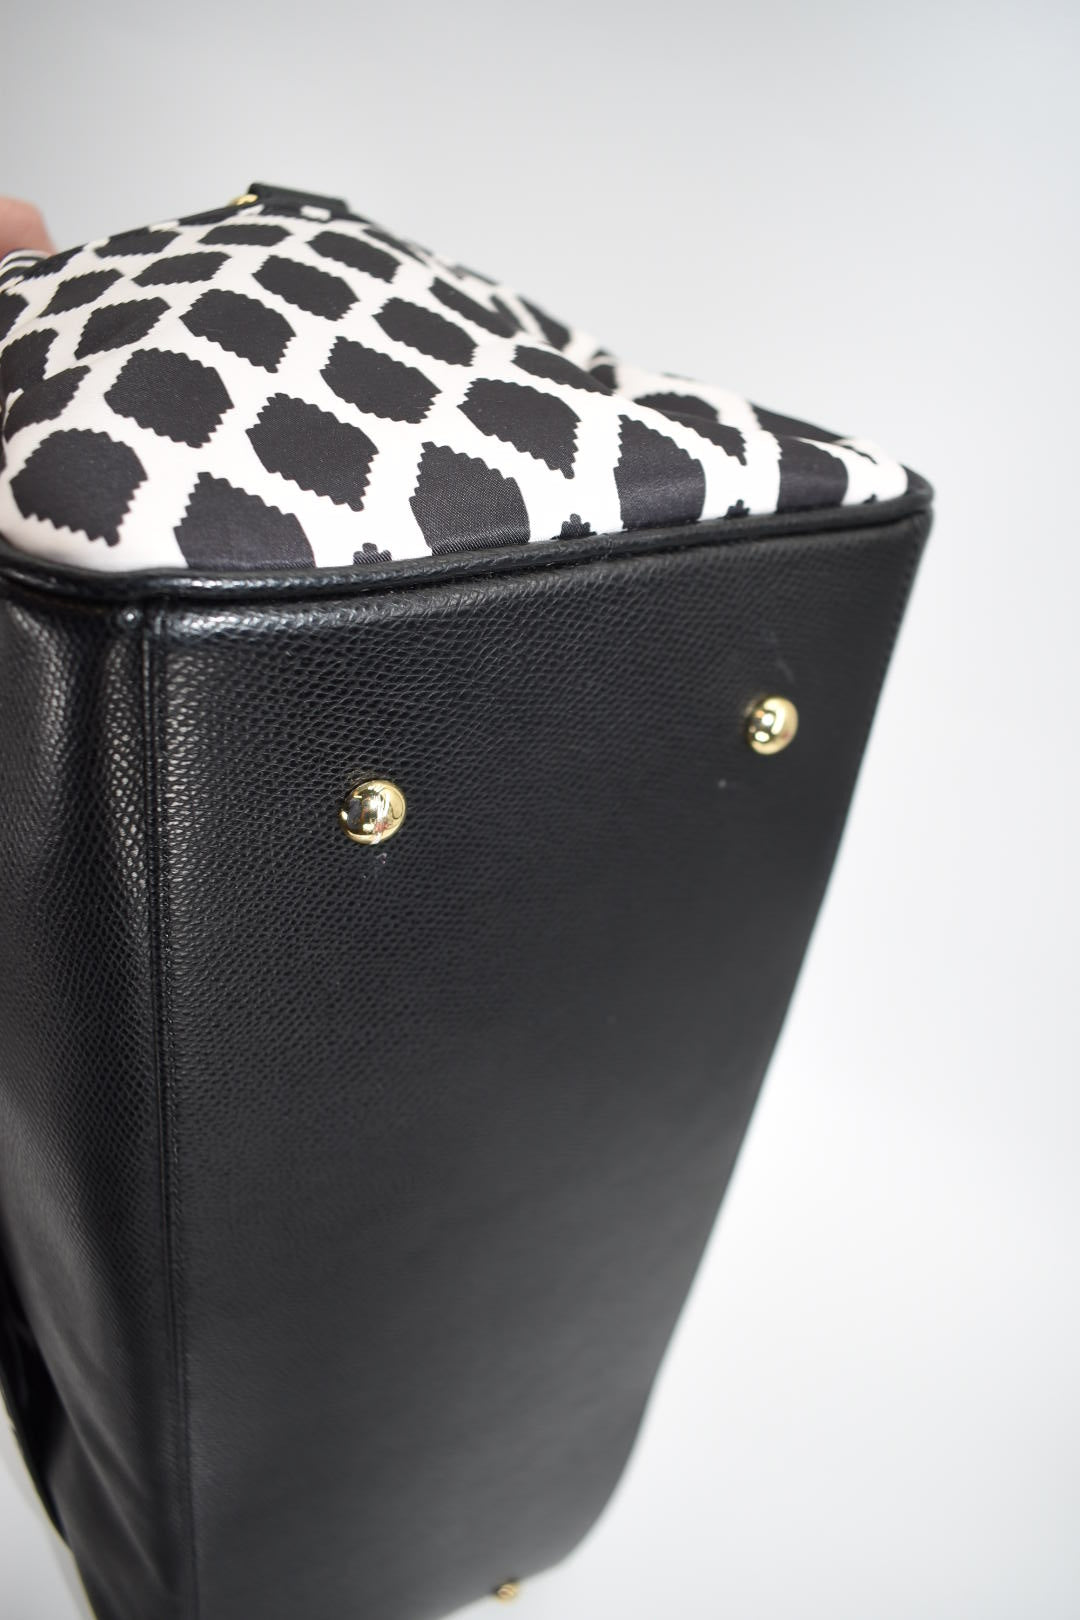 Vera Bradley Leather Trimmed Weekender Bag in "Ikat Spots" Pattern